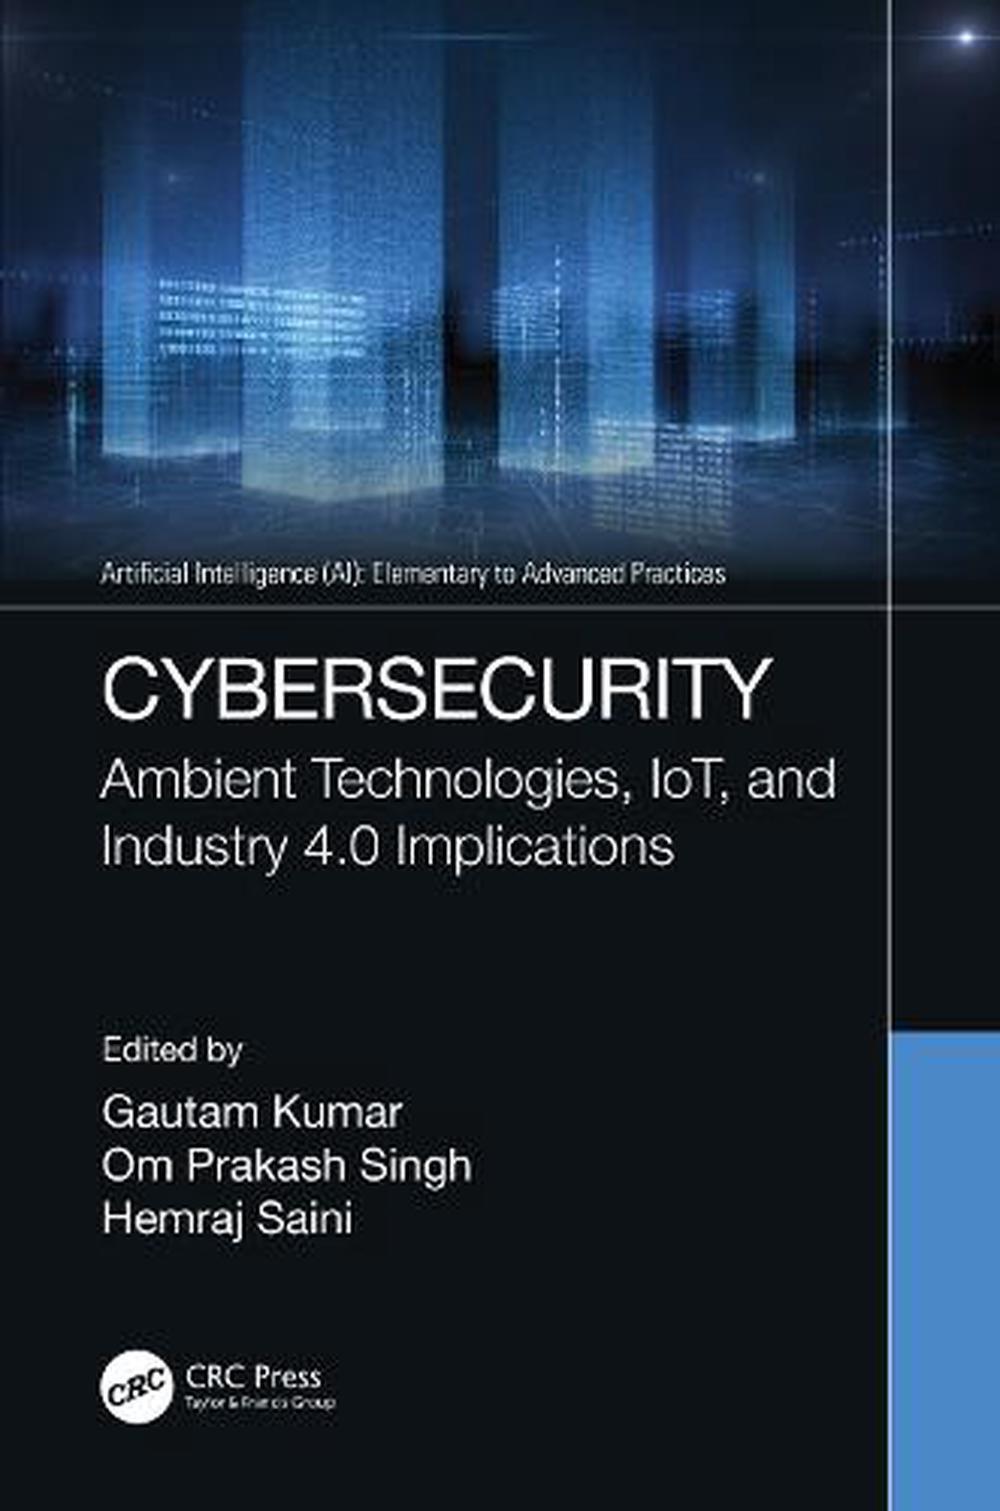 cybersecurity ambient technologies iot and industry 4.0 implications 1st edition gautam kumar, om prakash